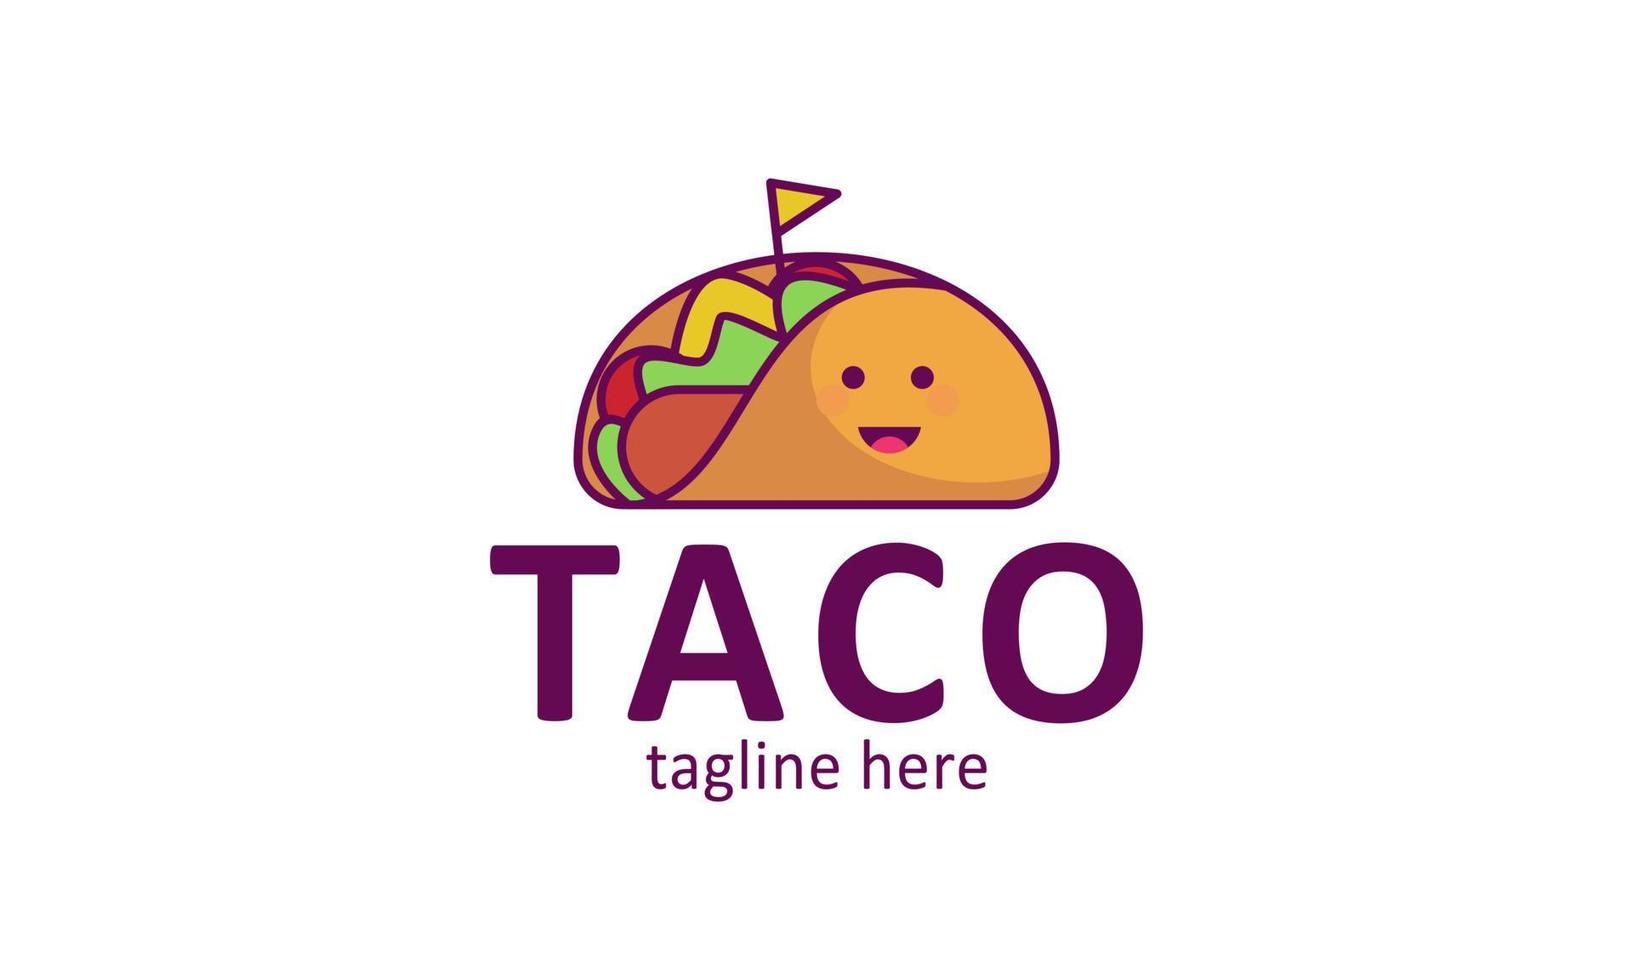 taco maskottchen cartoon vektor symbol illustration. süßer taco-kindercharakter mit glocke